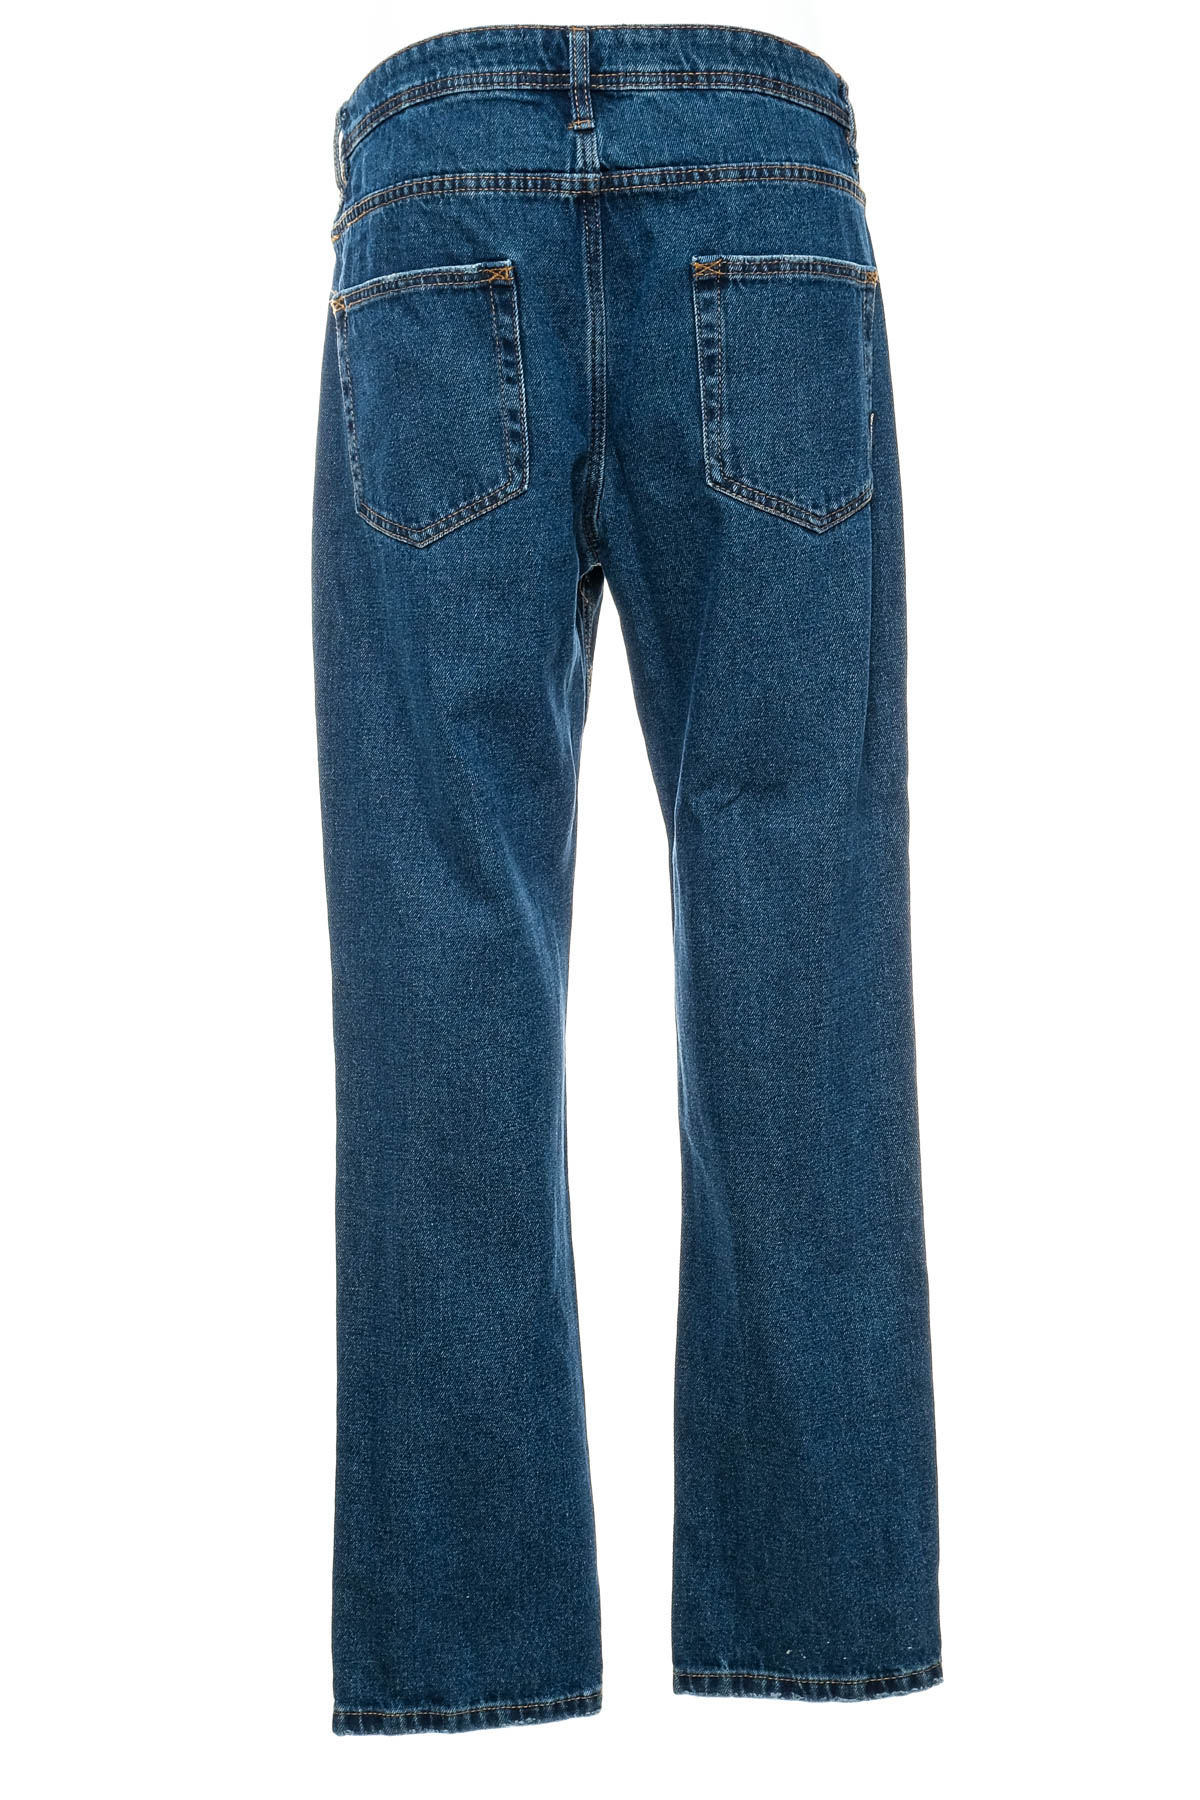 Men's jeans - Sinsay - 1